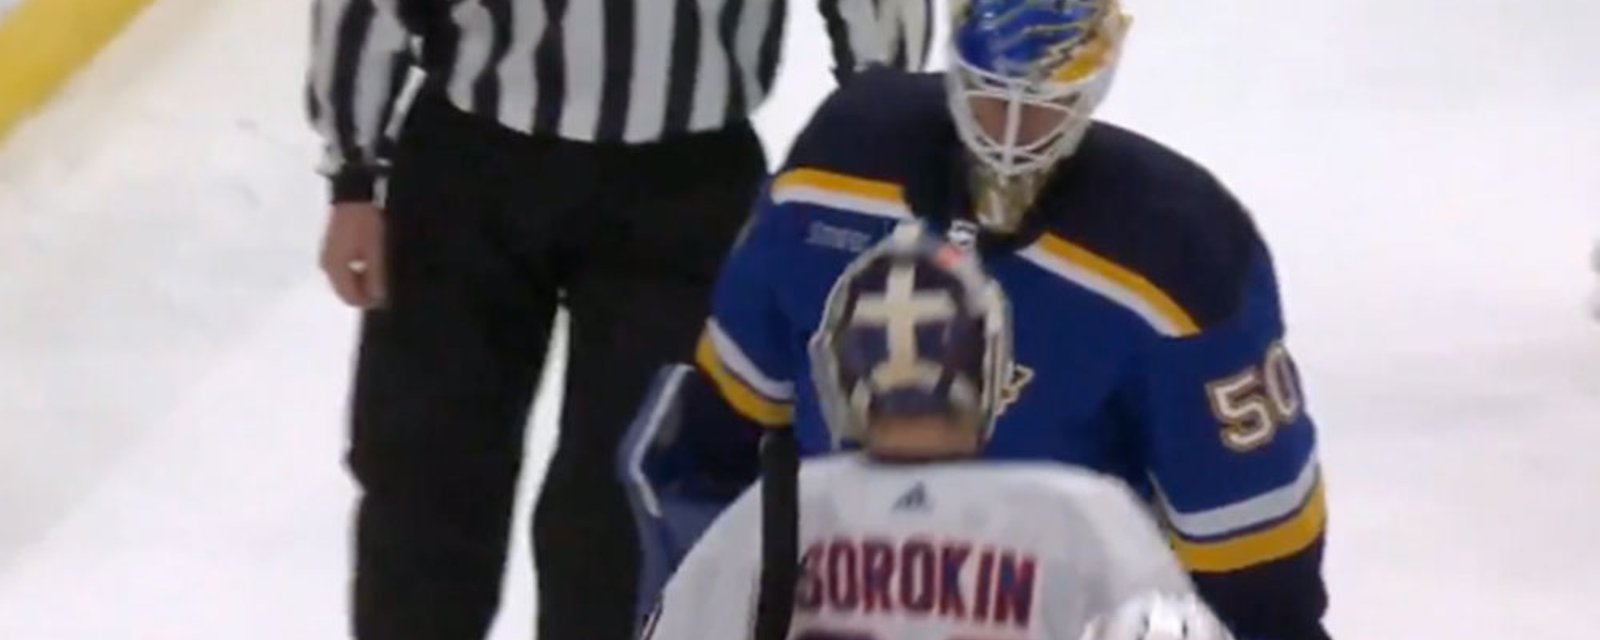 Jordan Binnington hits Ilya Sorokin with a legit body check as they head off the ice